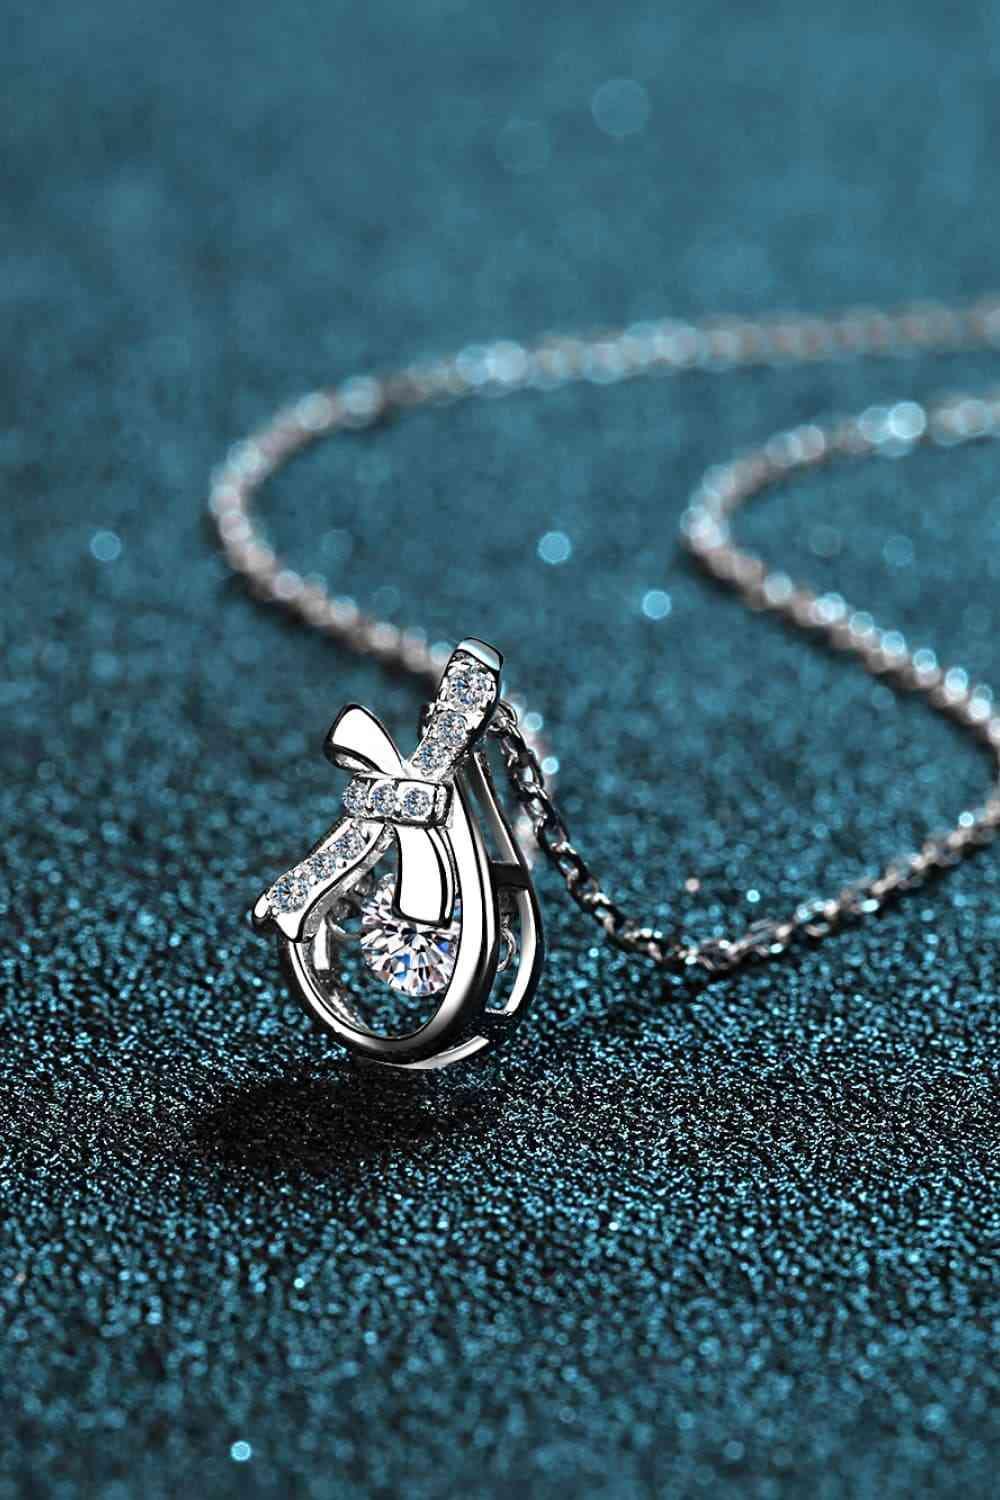 a diamond pendant on a chain on a blue surface